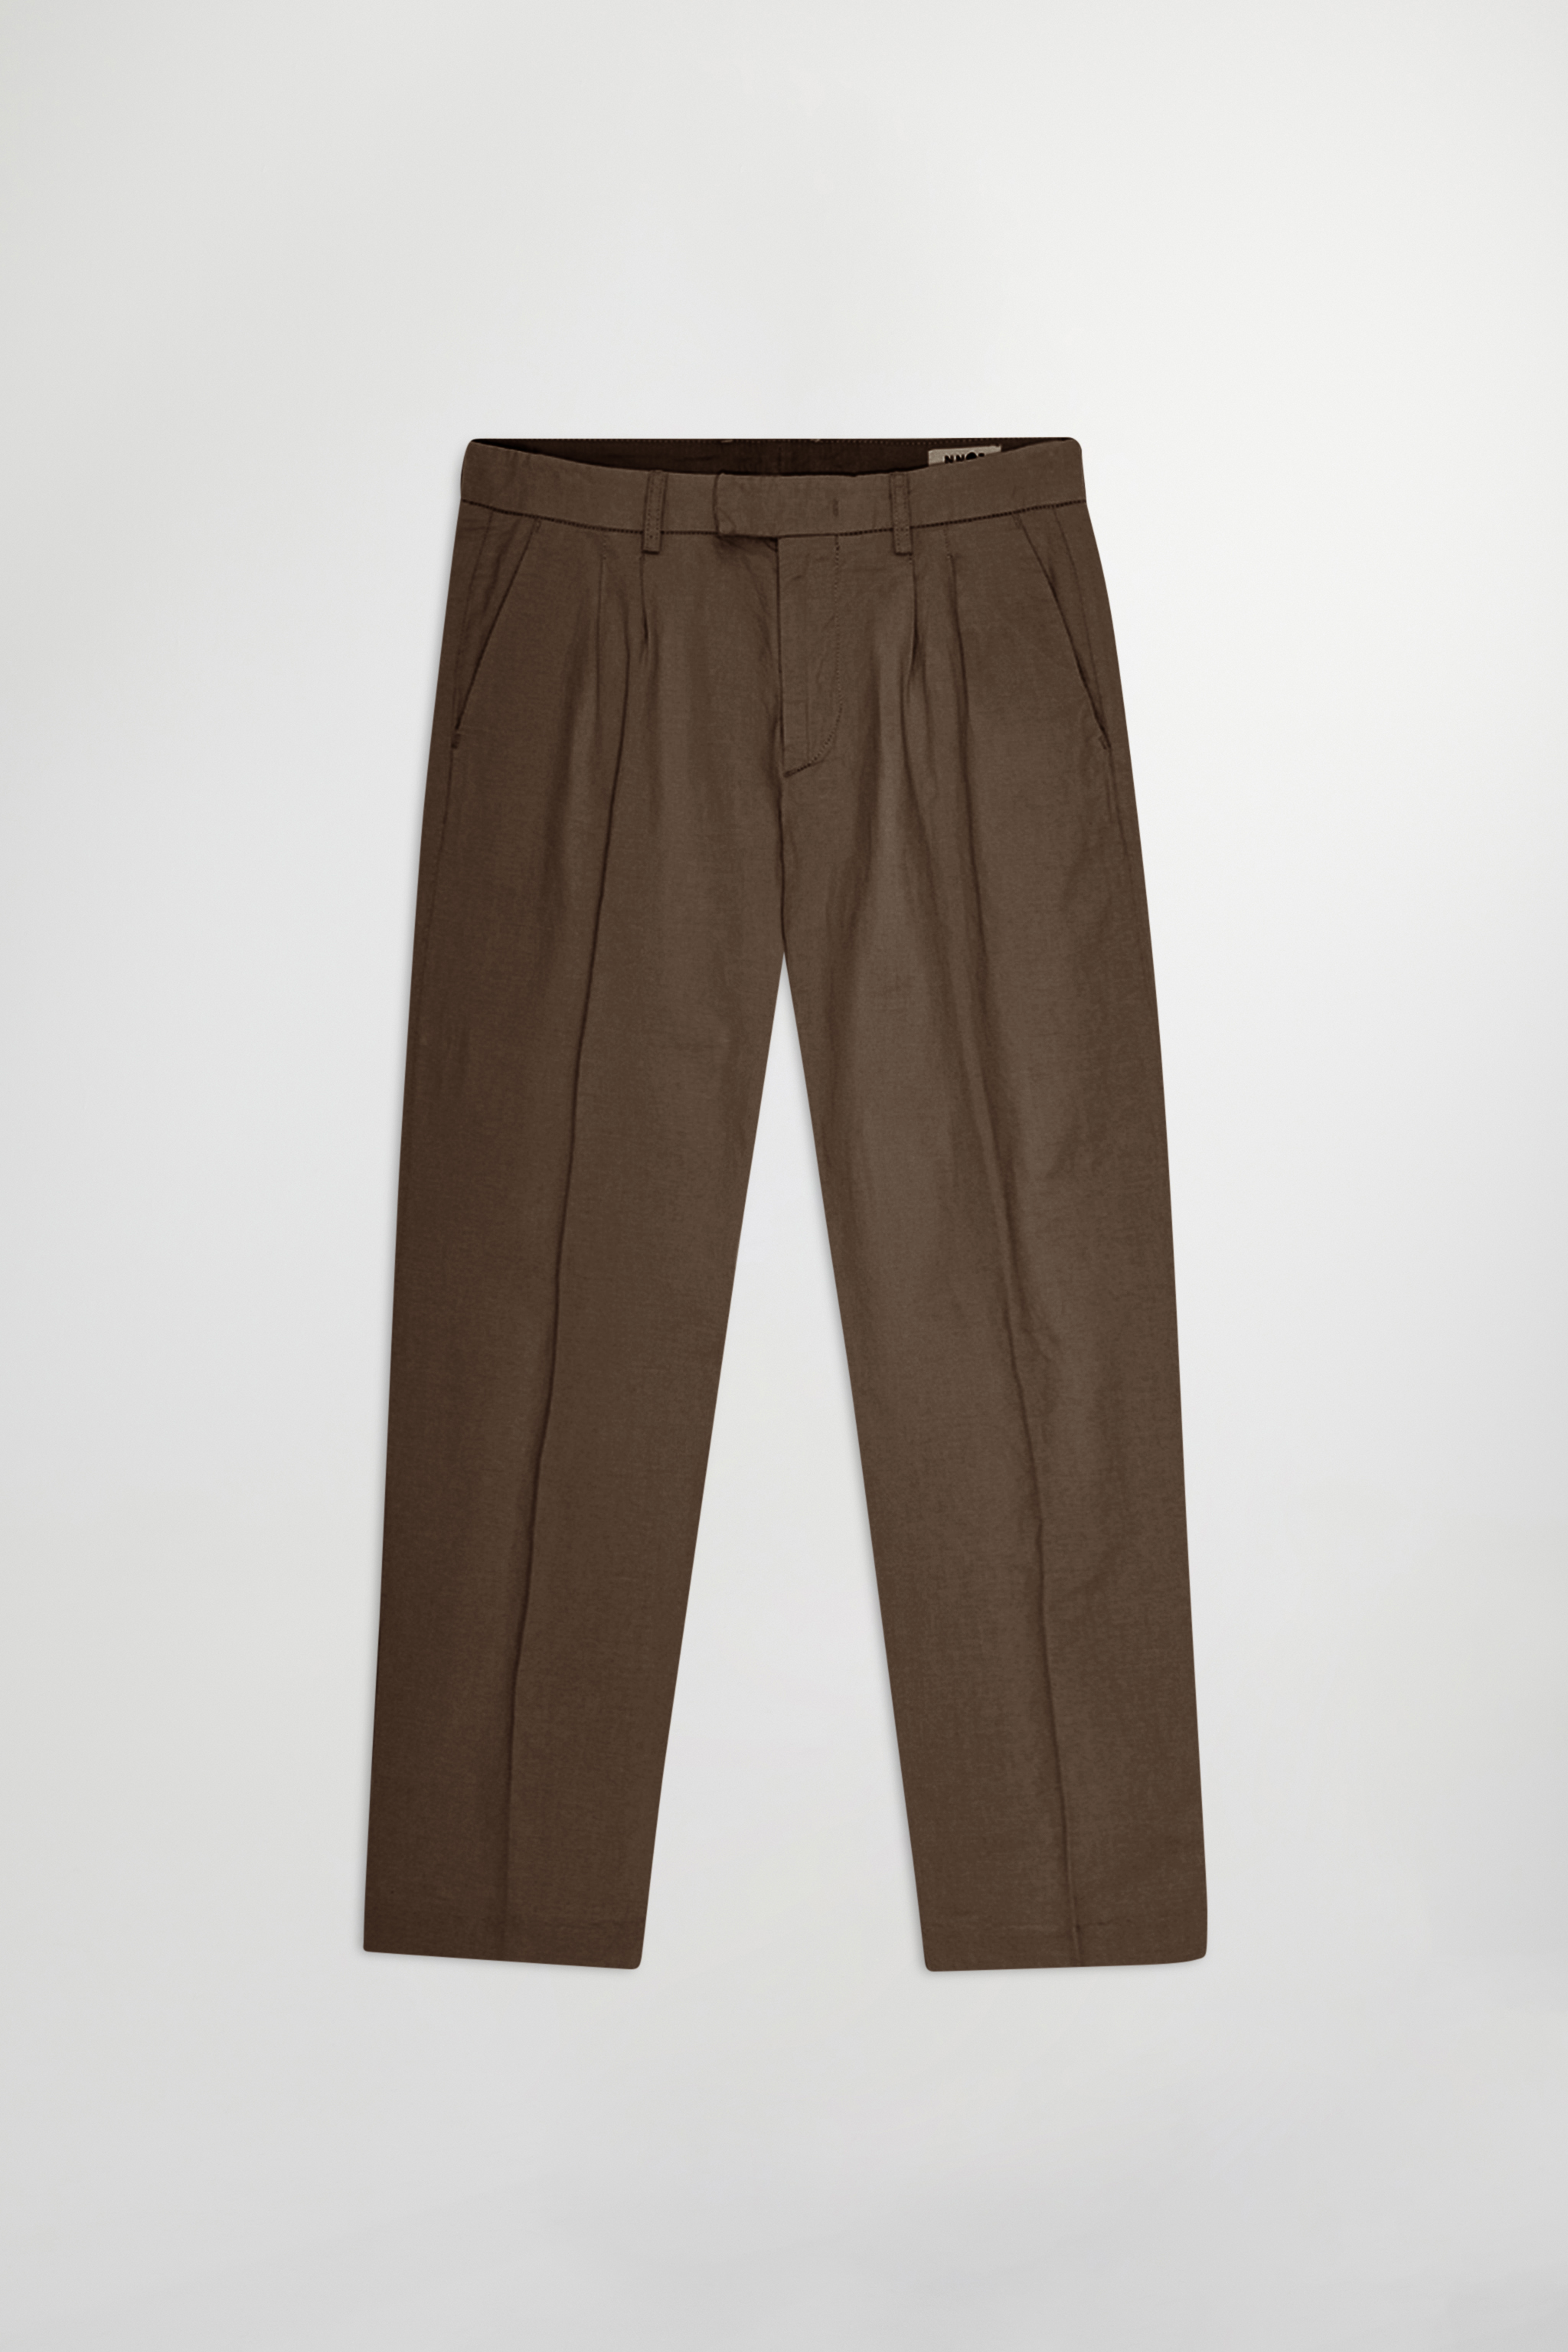 Fritz 1912 men's trousers - Brown - Buy online at NN.07®